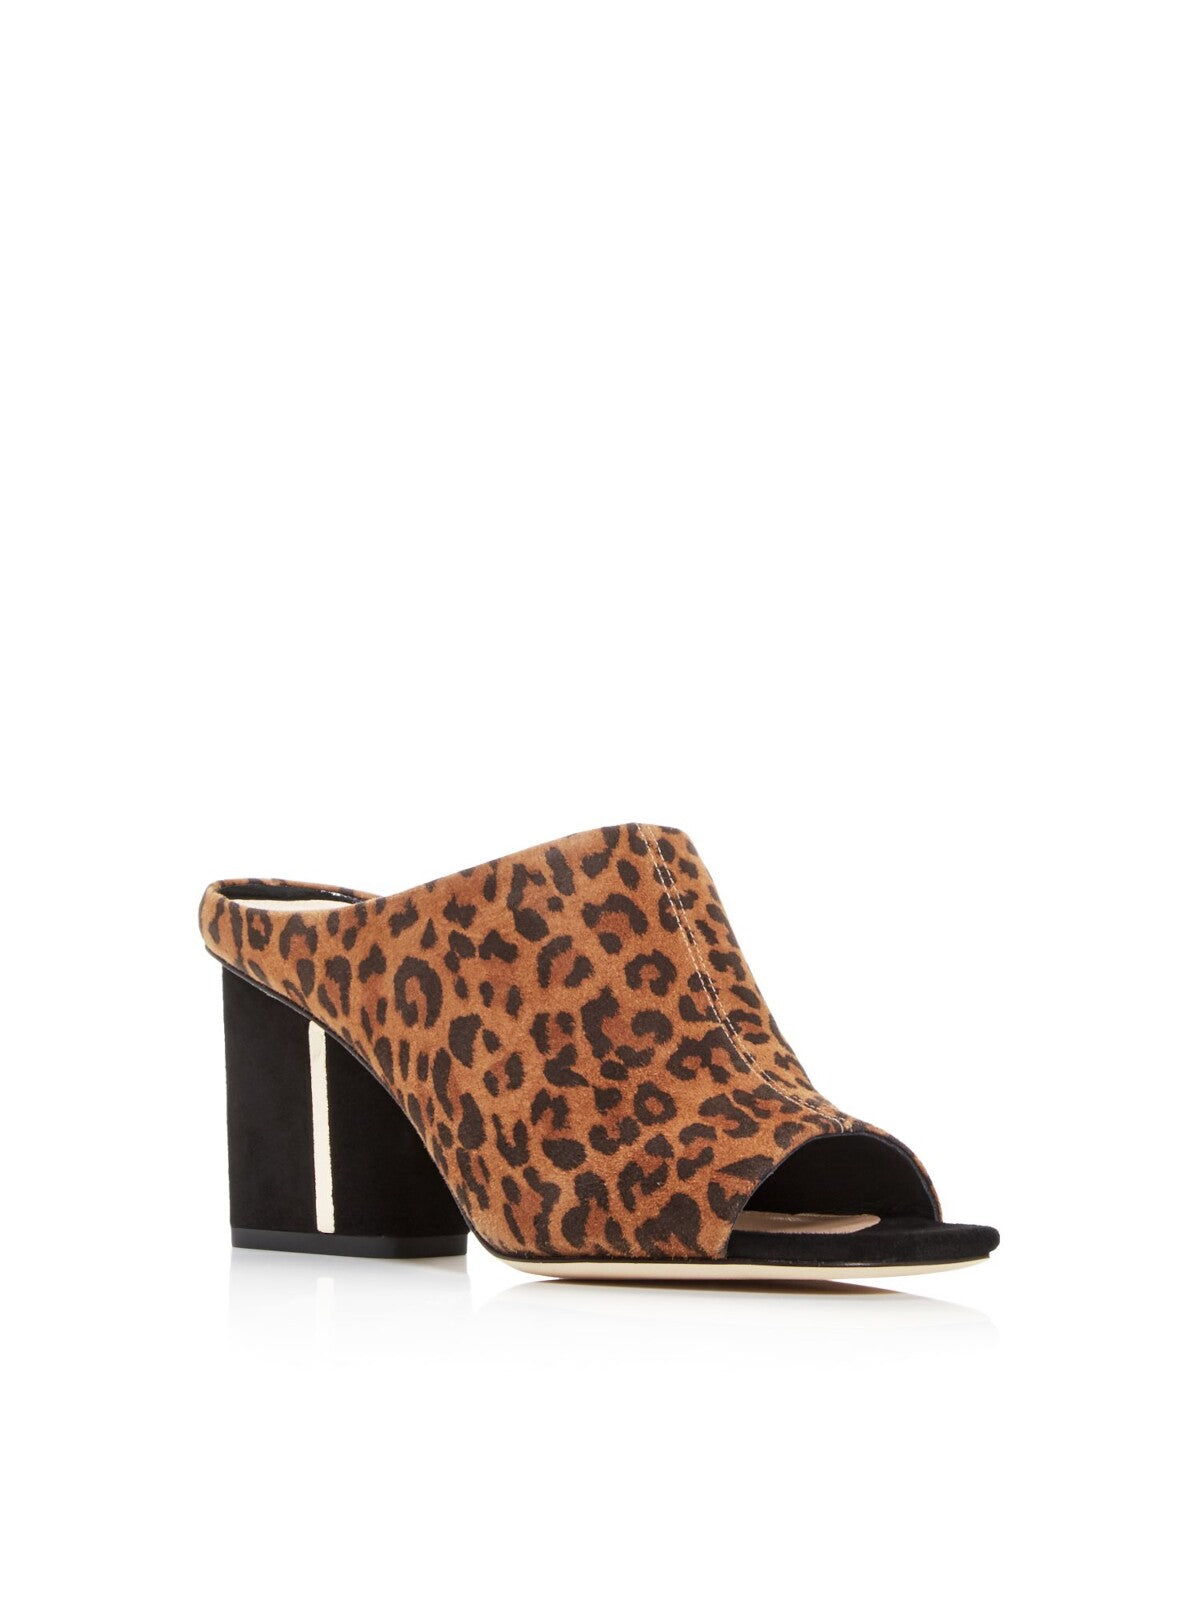 VIA SPIGA Womens Brown Leopard Print Metallic Trim Heel Cushioned Hennie Square Toe Block Heel Slip On Leather Heeled Mules Shoes 6.5 M